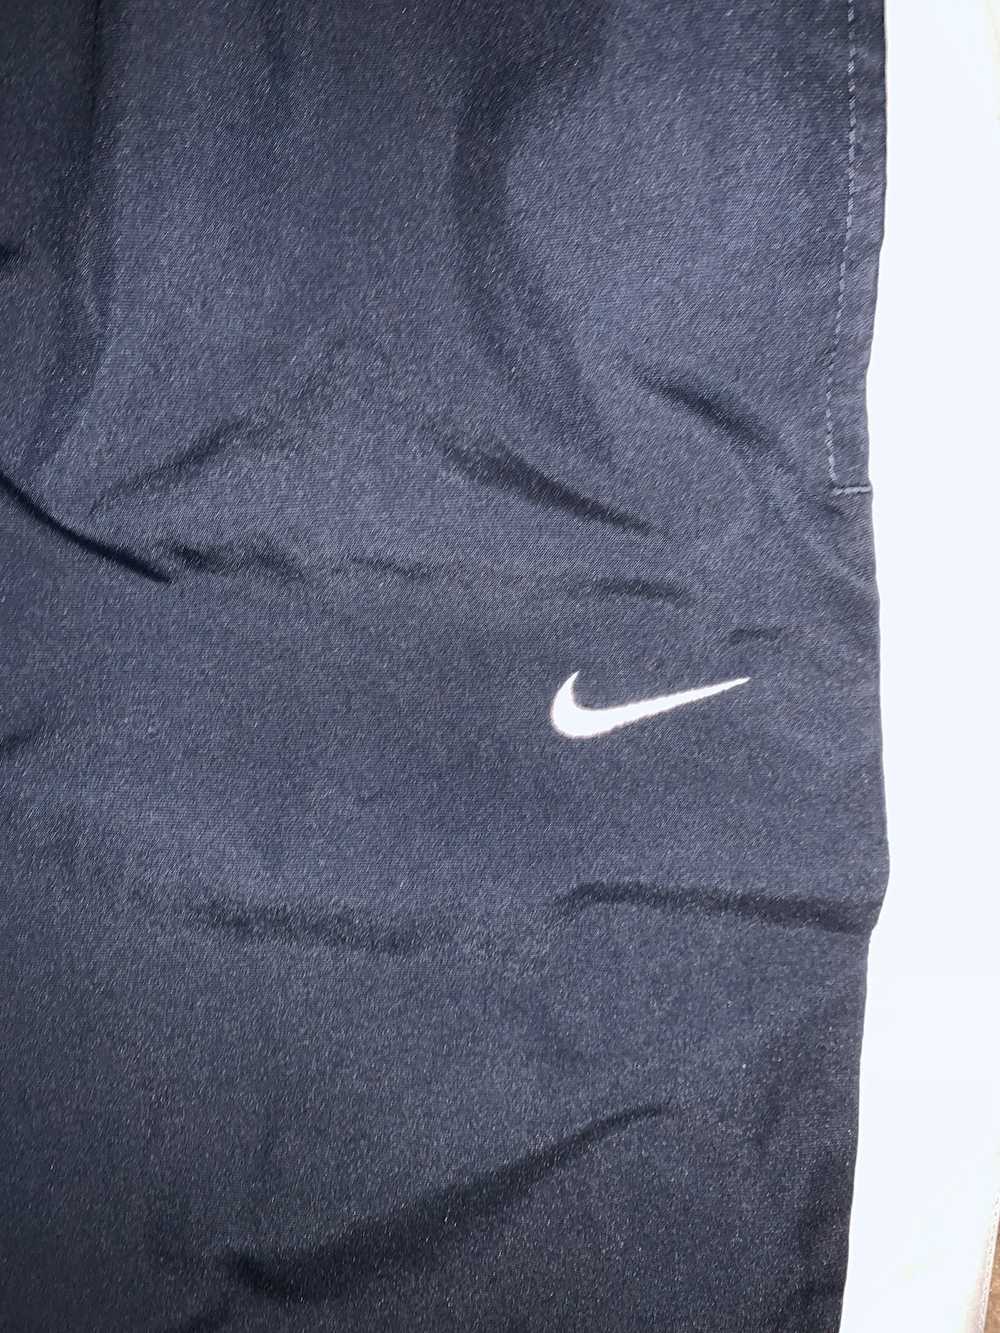 Nike Nike Vintage Sweatpants - image 2